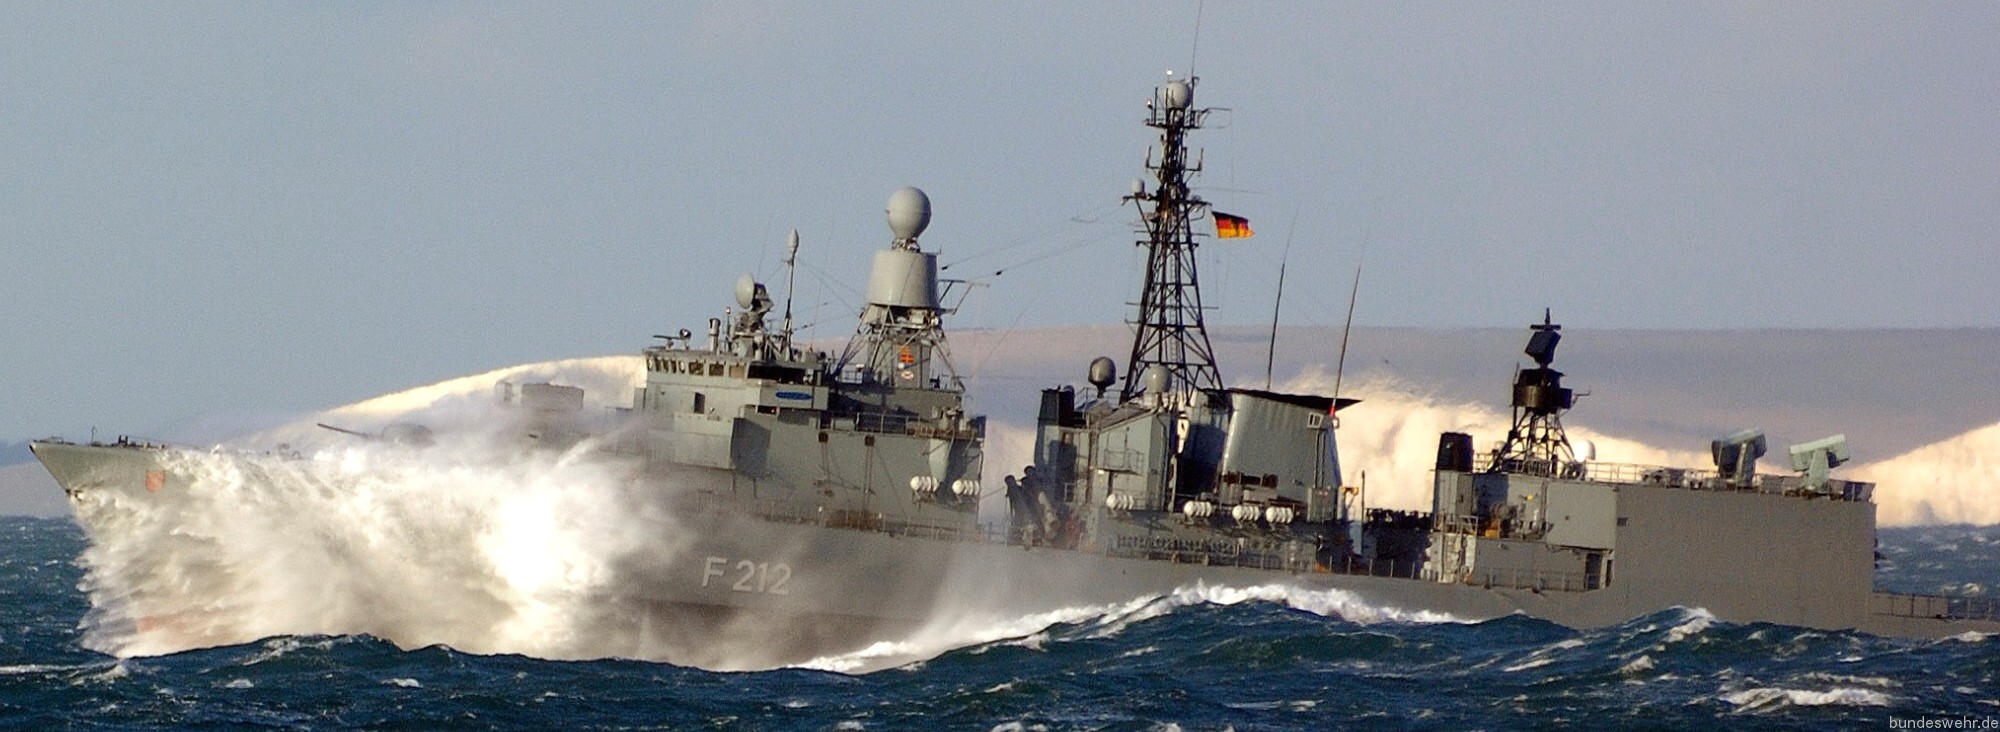 f-212 fgs karlsruhe type 122 bremen class frigate german navy deutsche marine fregatte 29